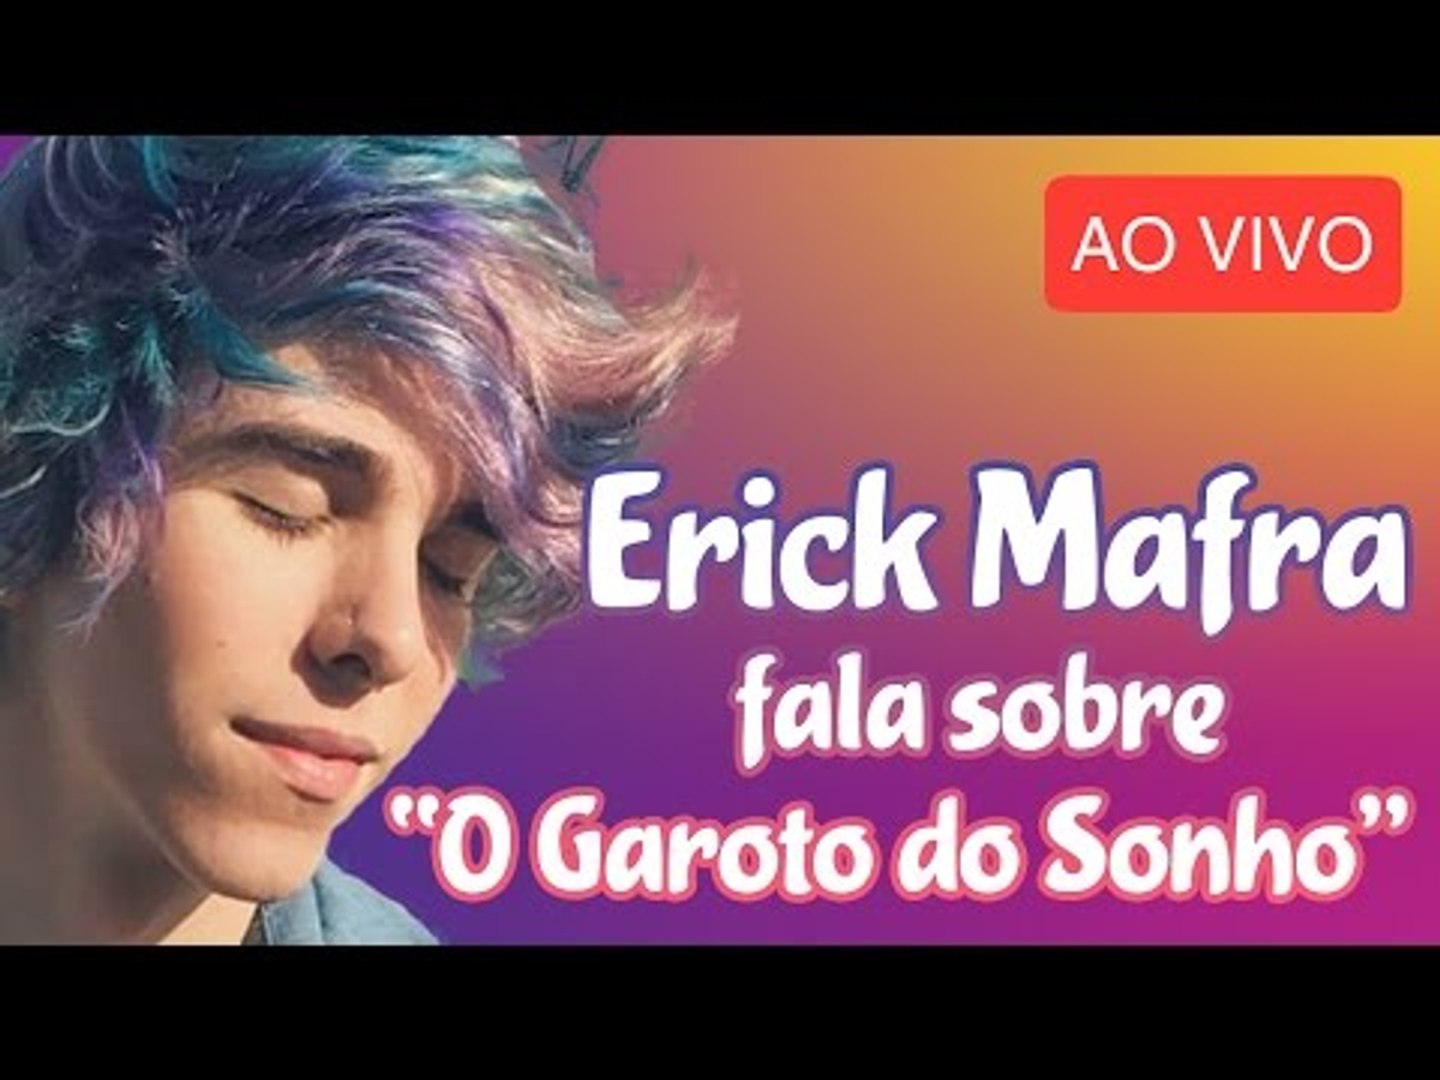 AO VIVO] Erick Mafra fala sobre O Garoto do Sonho - video Dailymotion